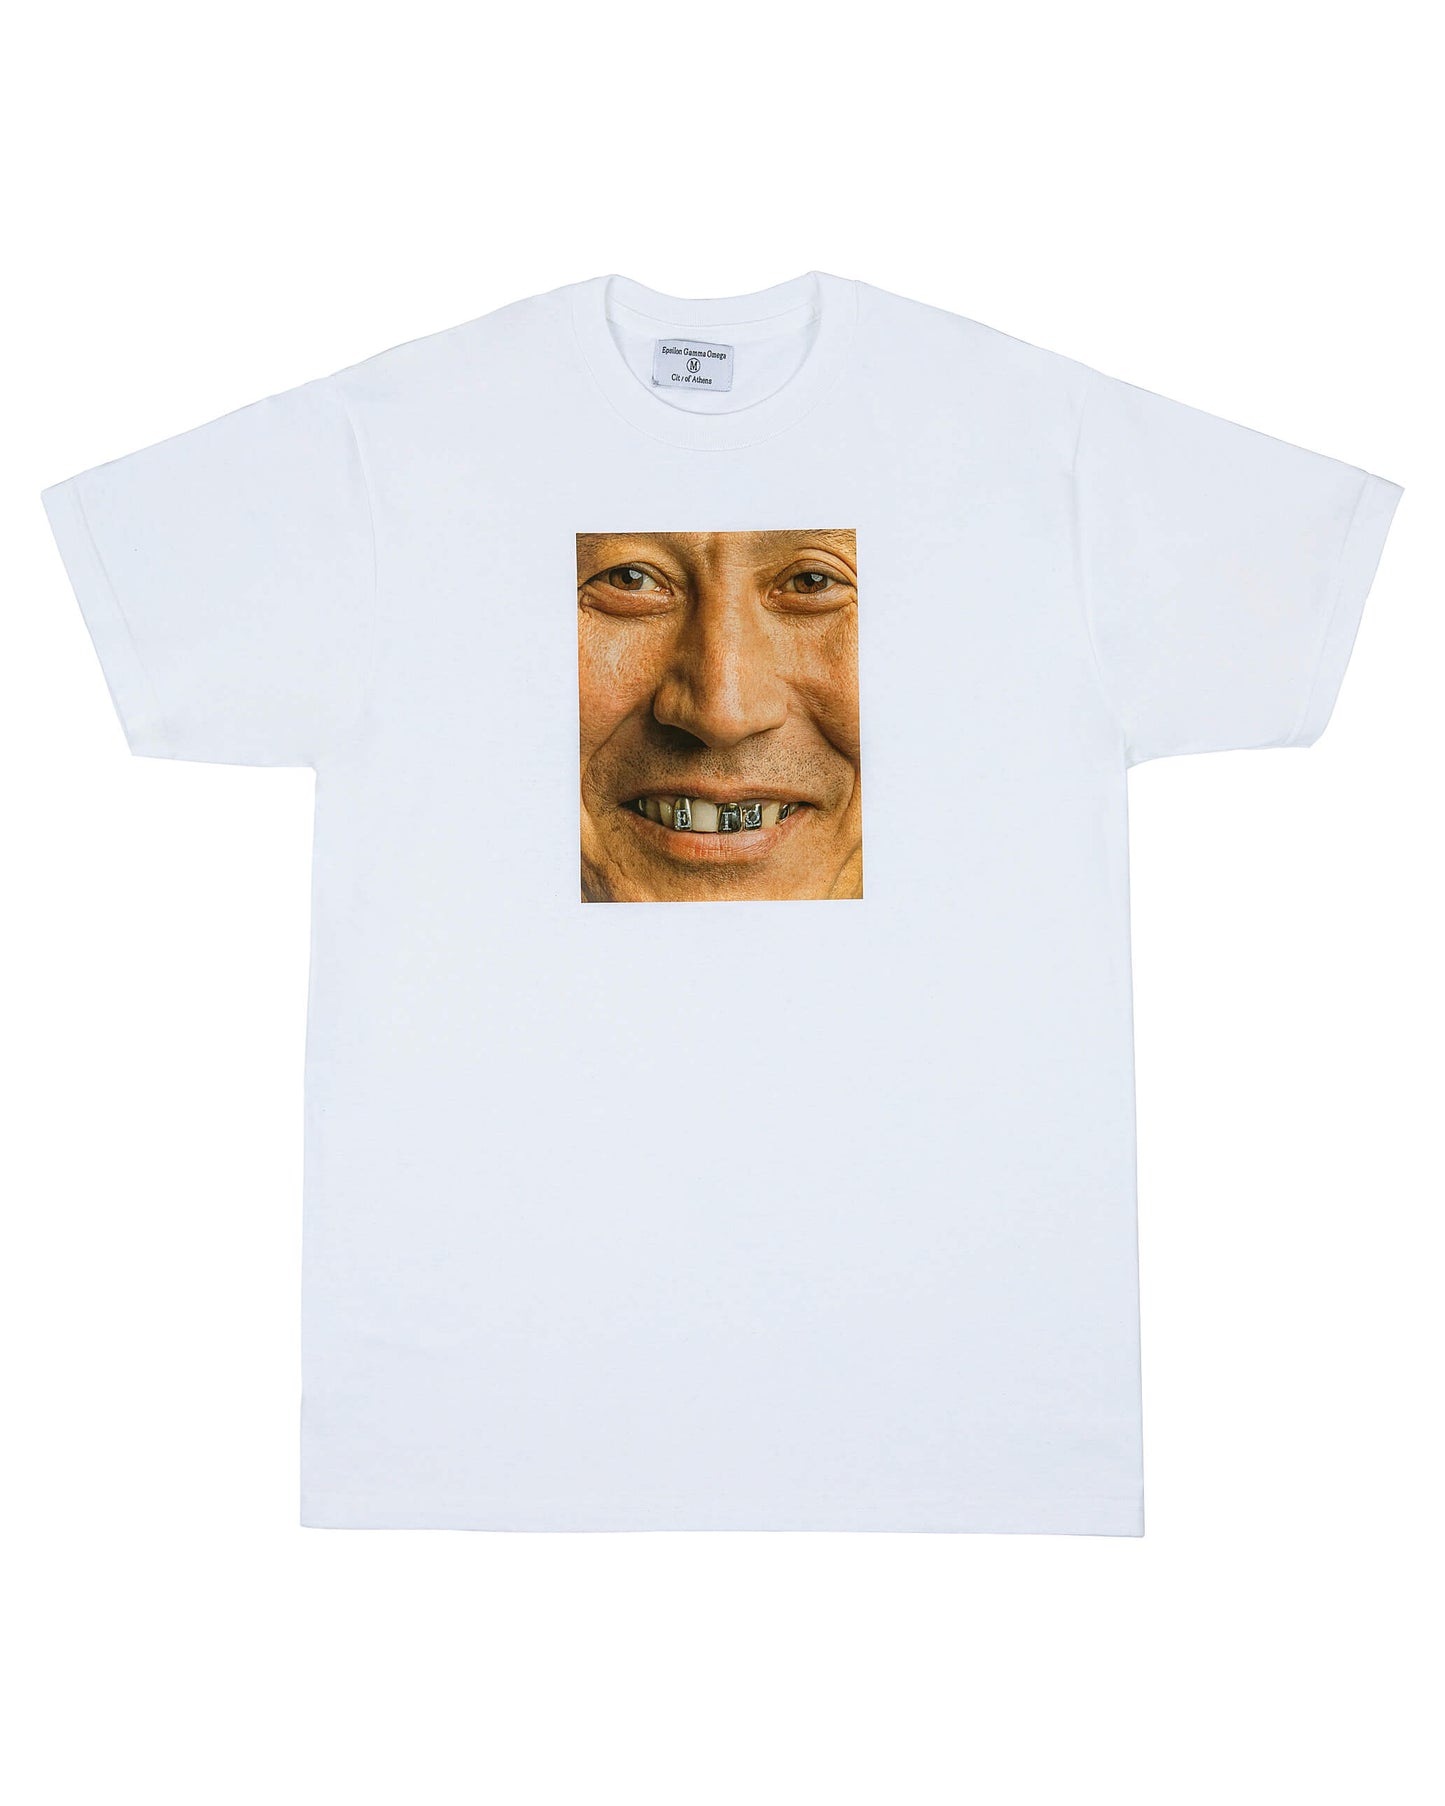 The man t-shirt